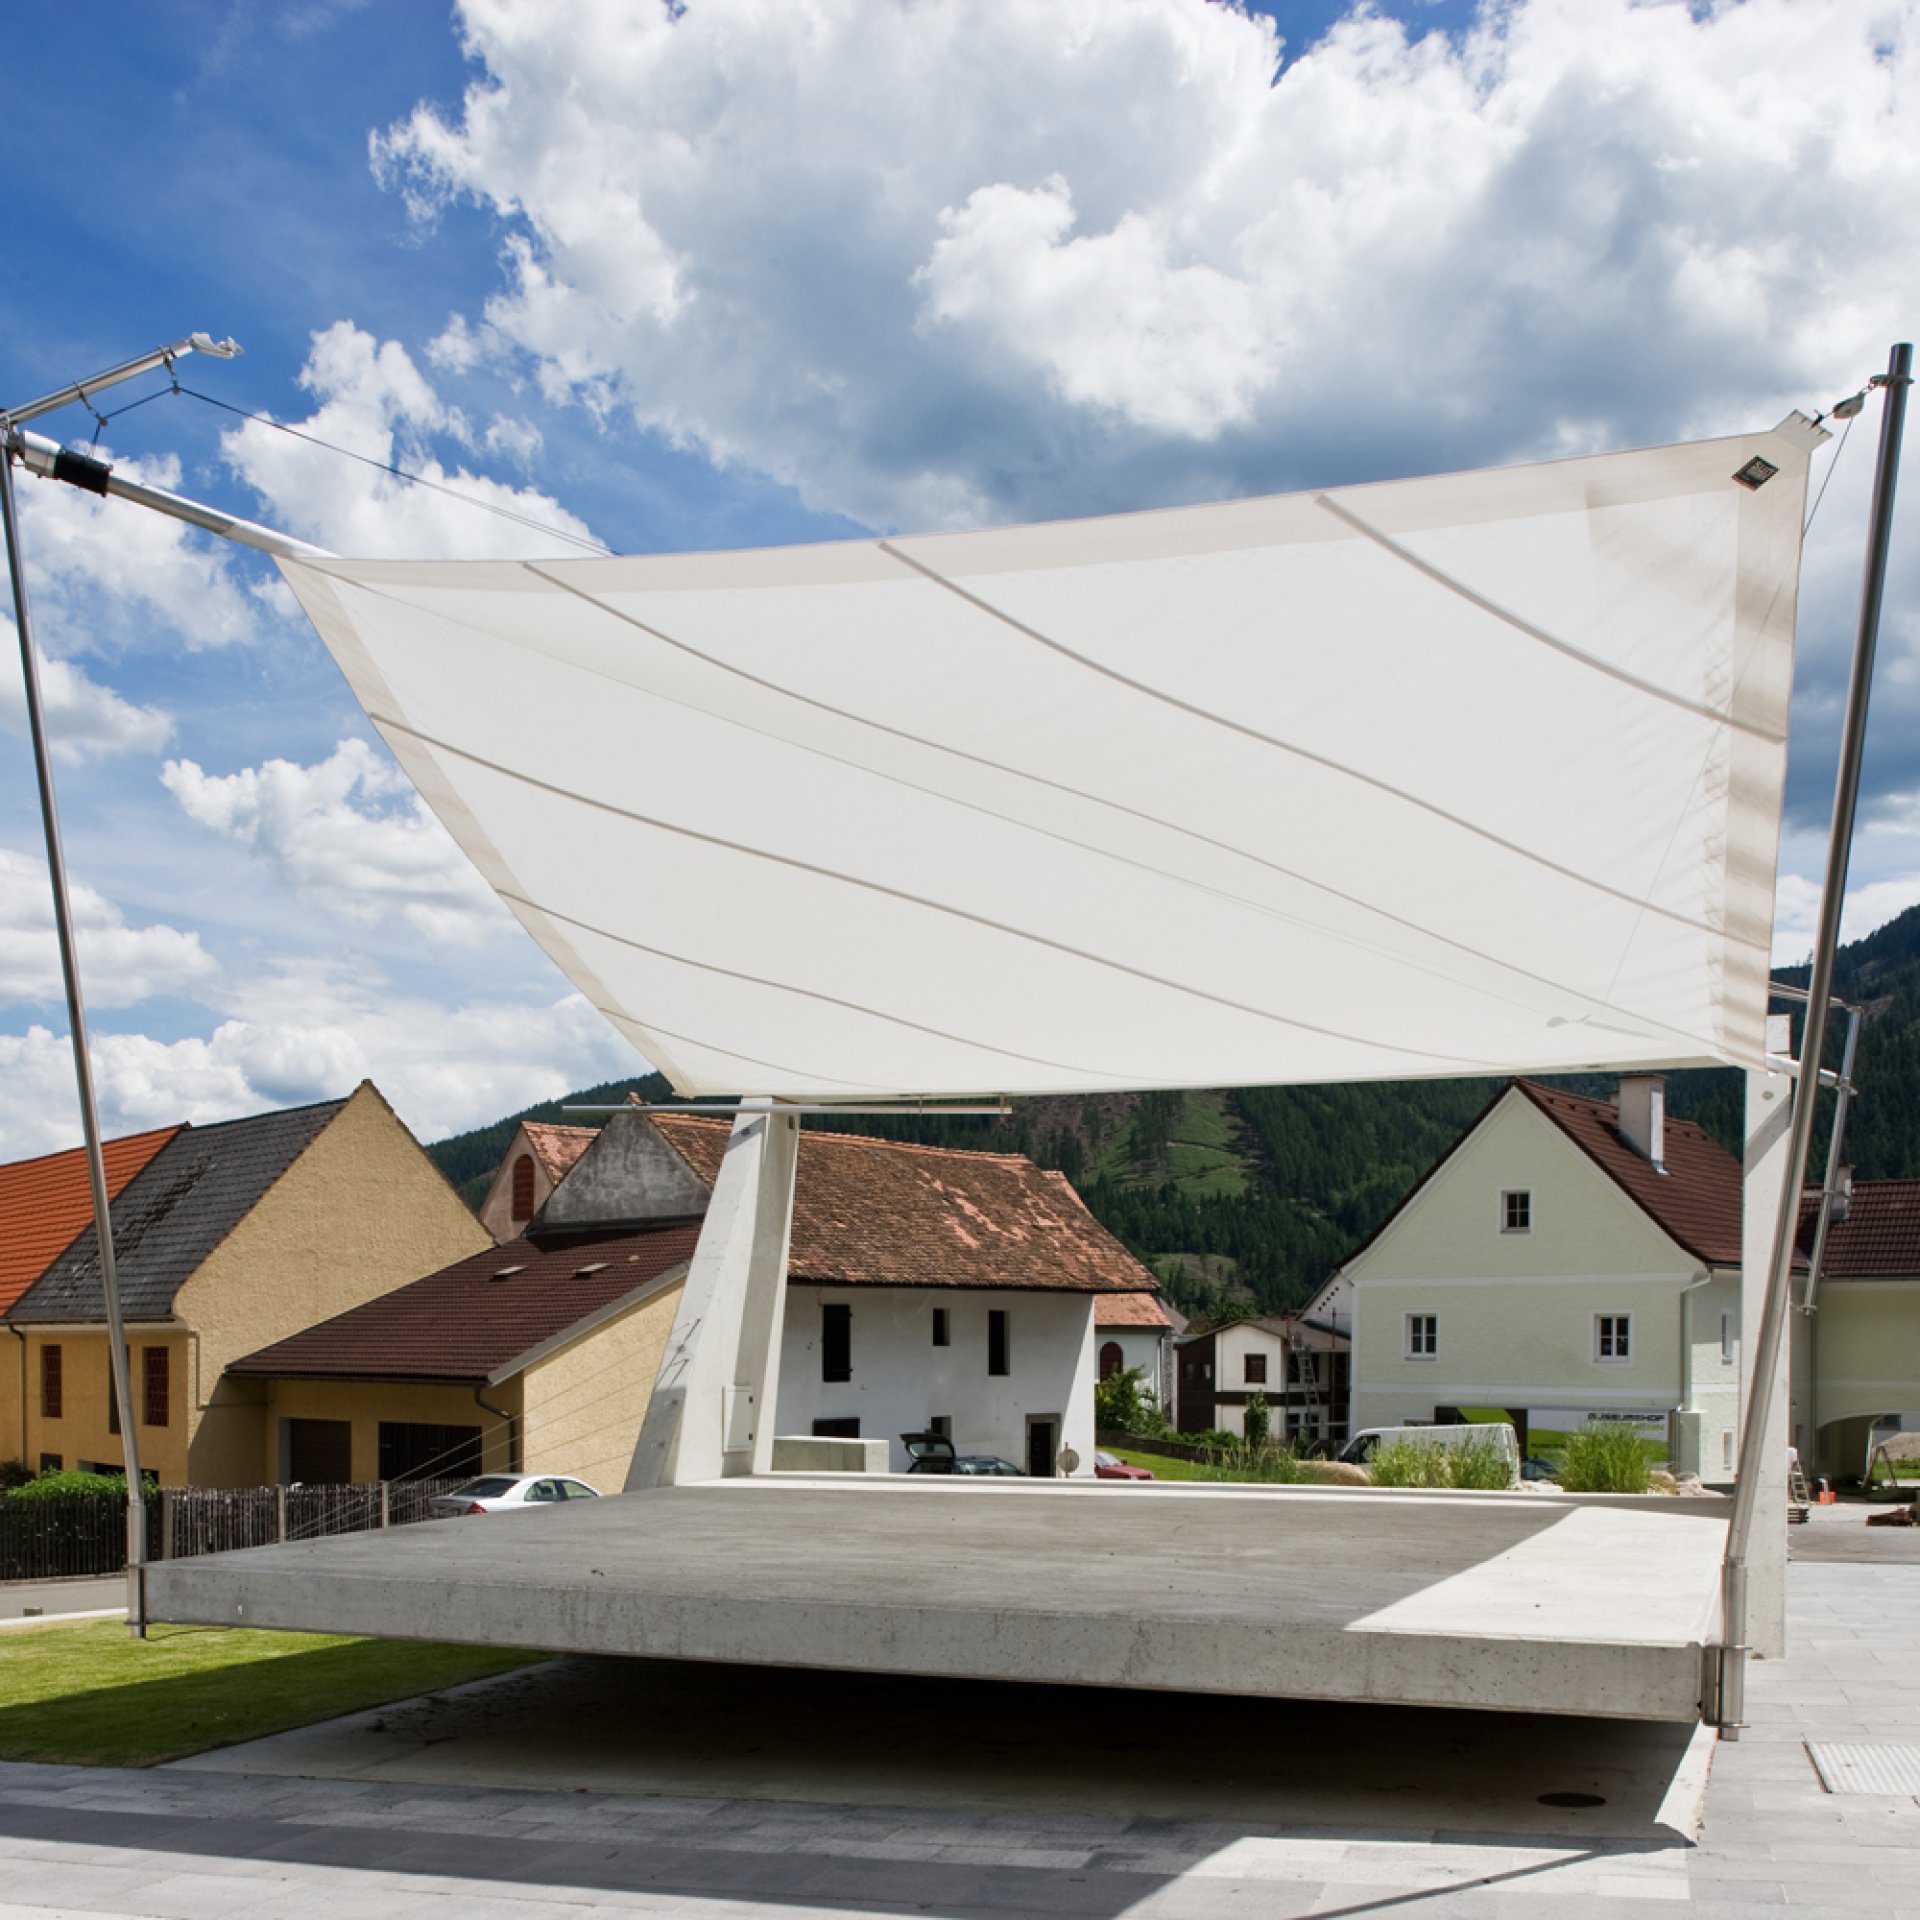 SunSquare - sun sail systems according to individual needs.